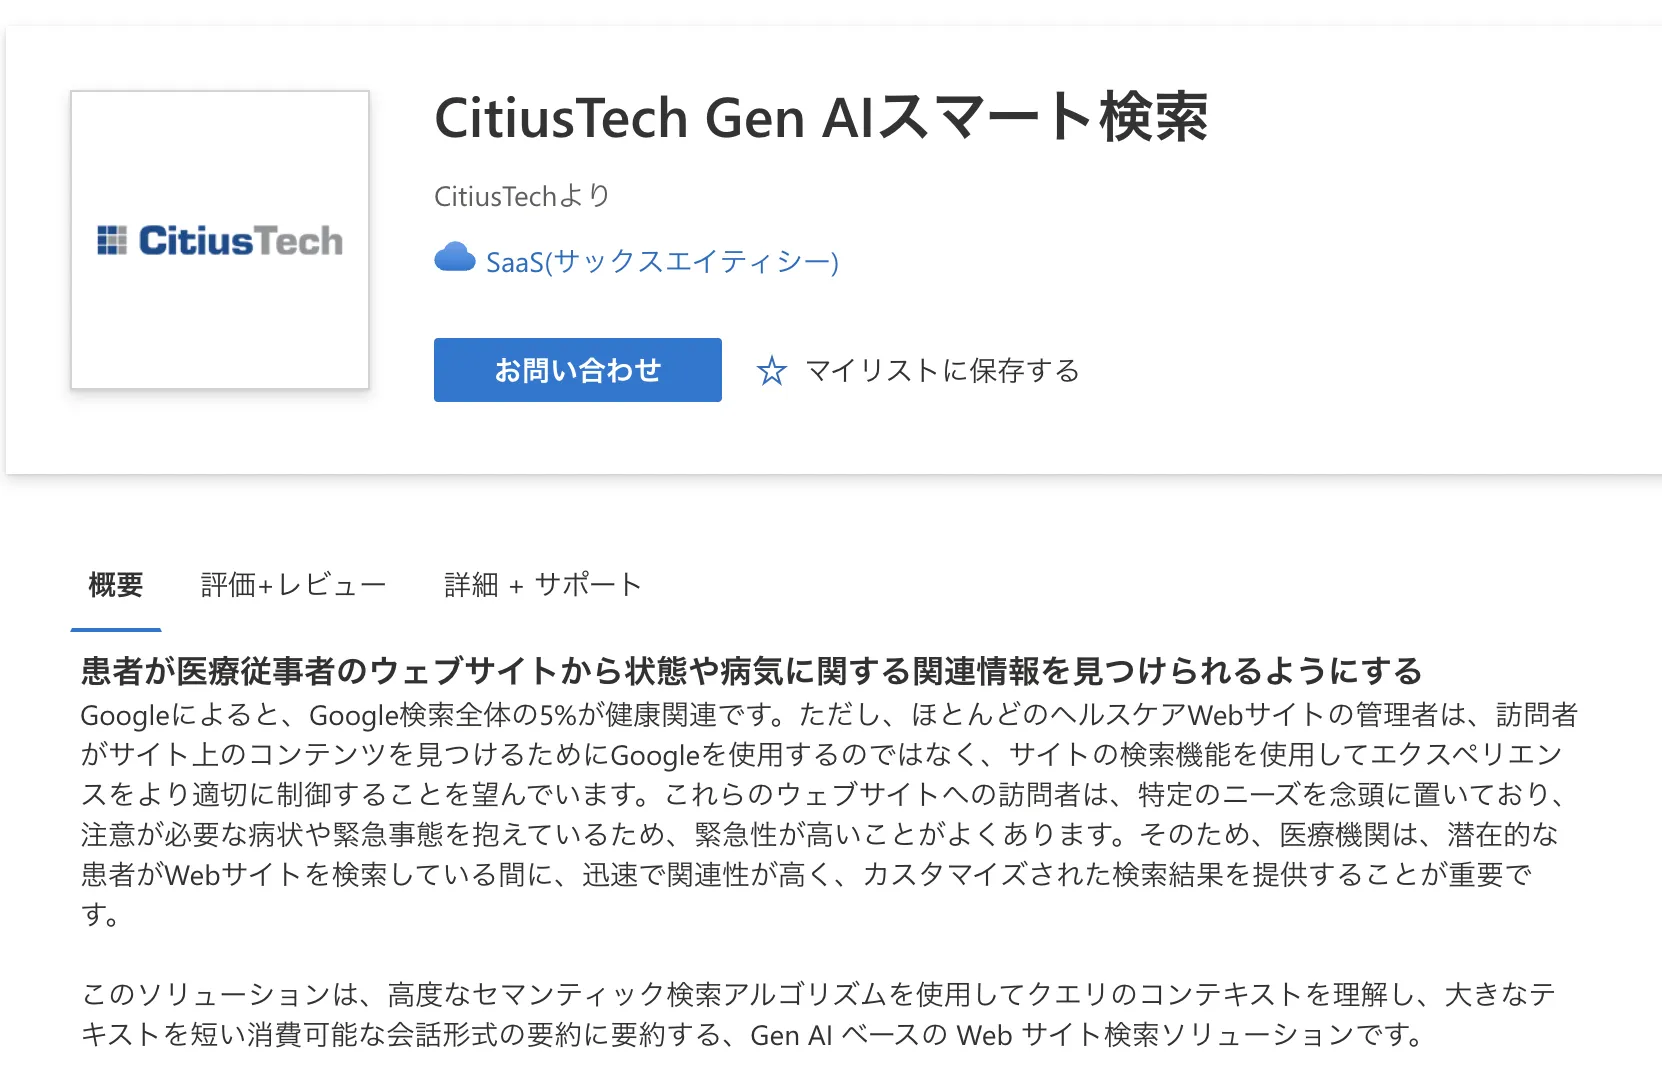 CitiusTech のスマート検索